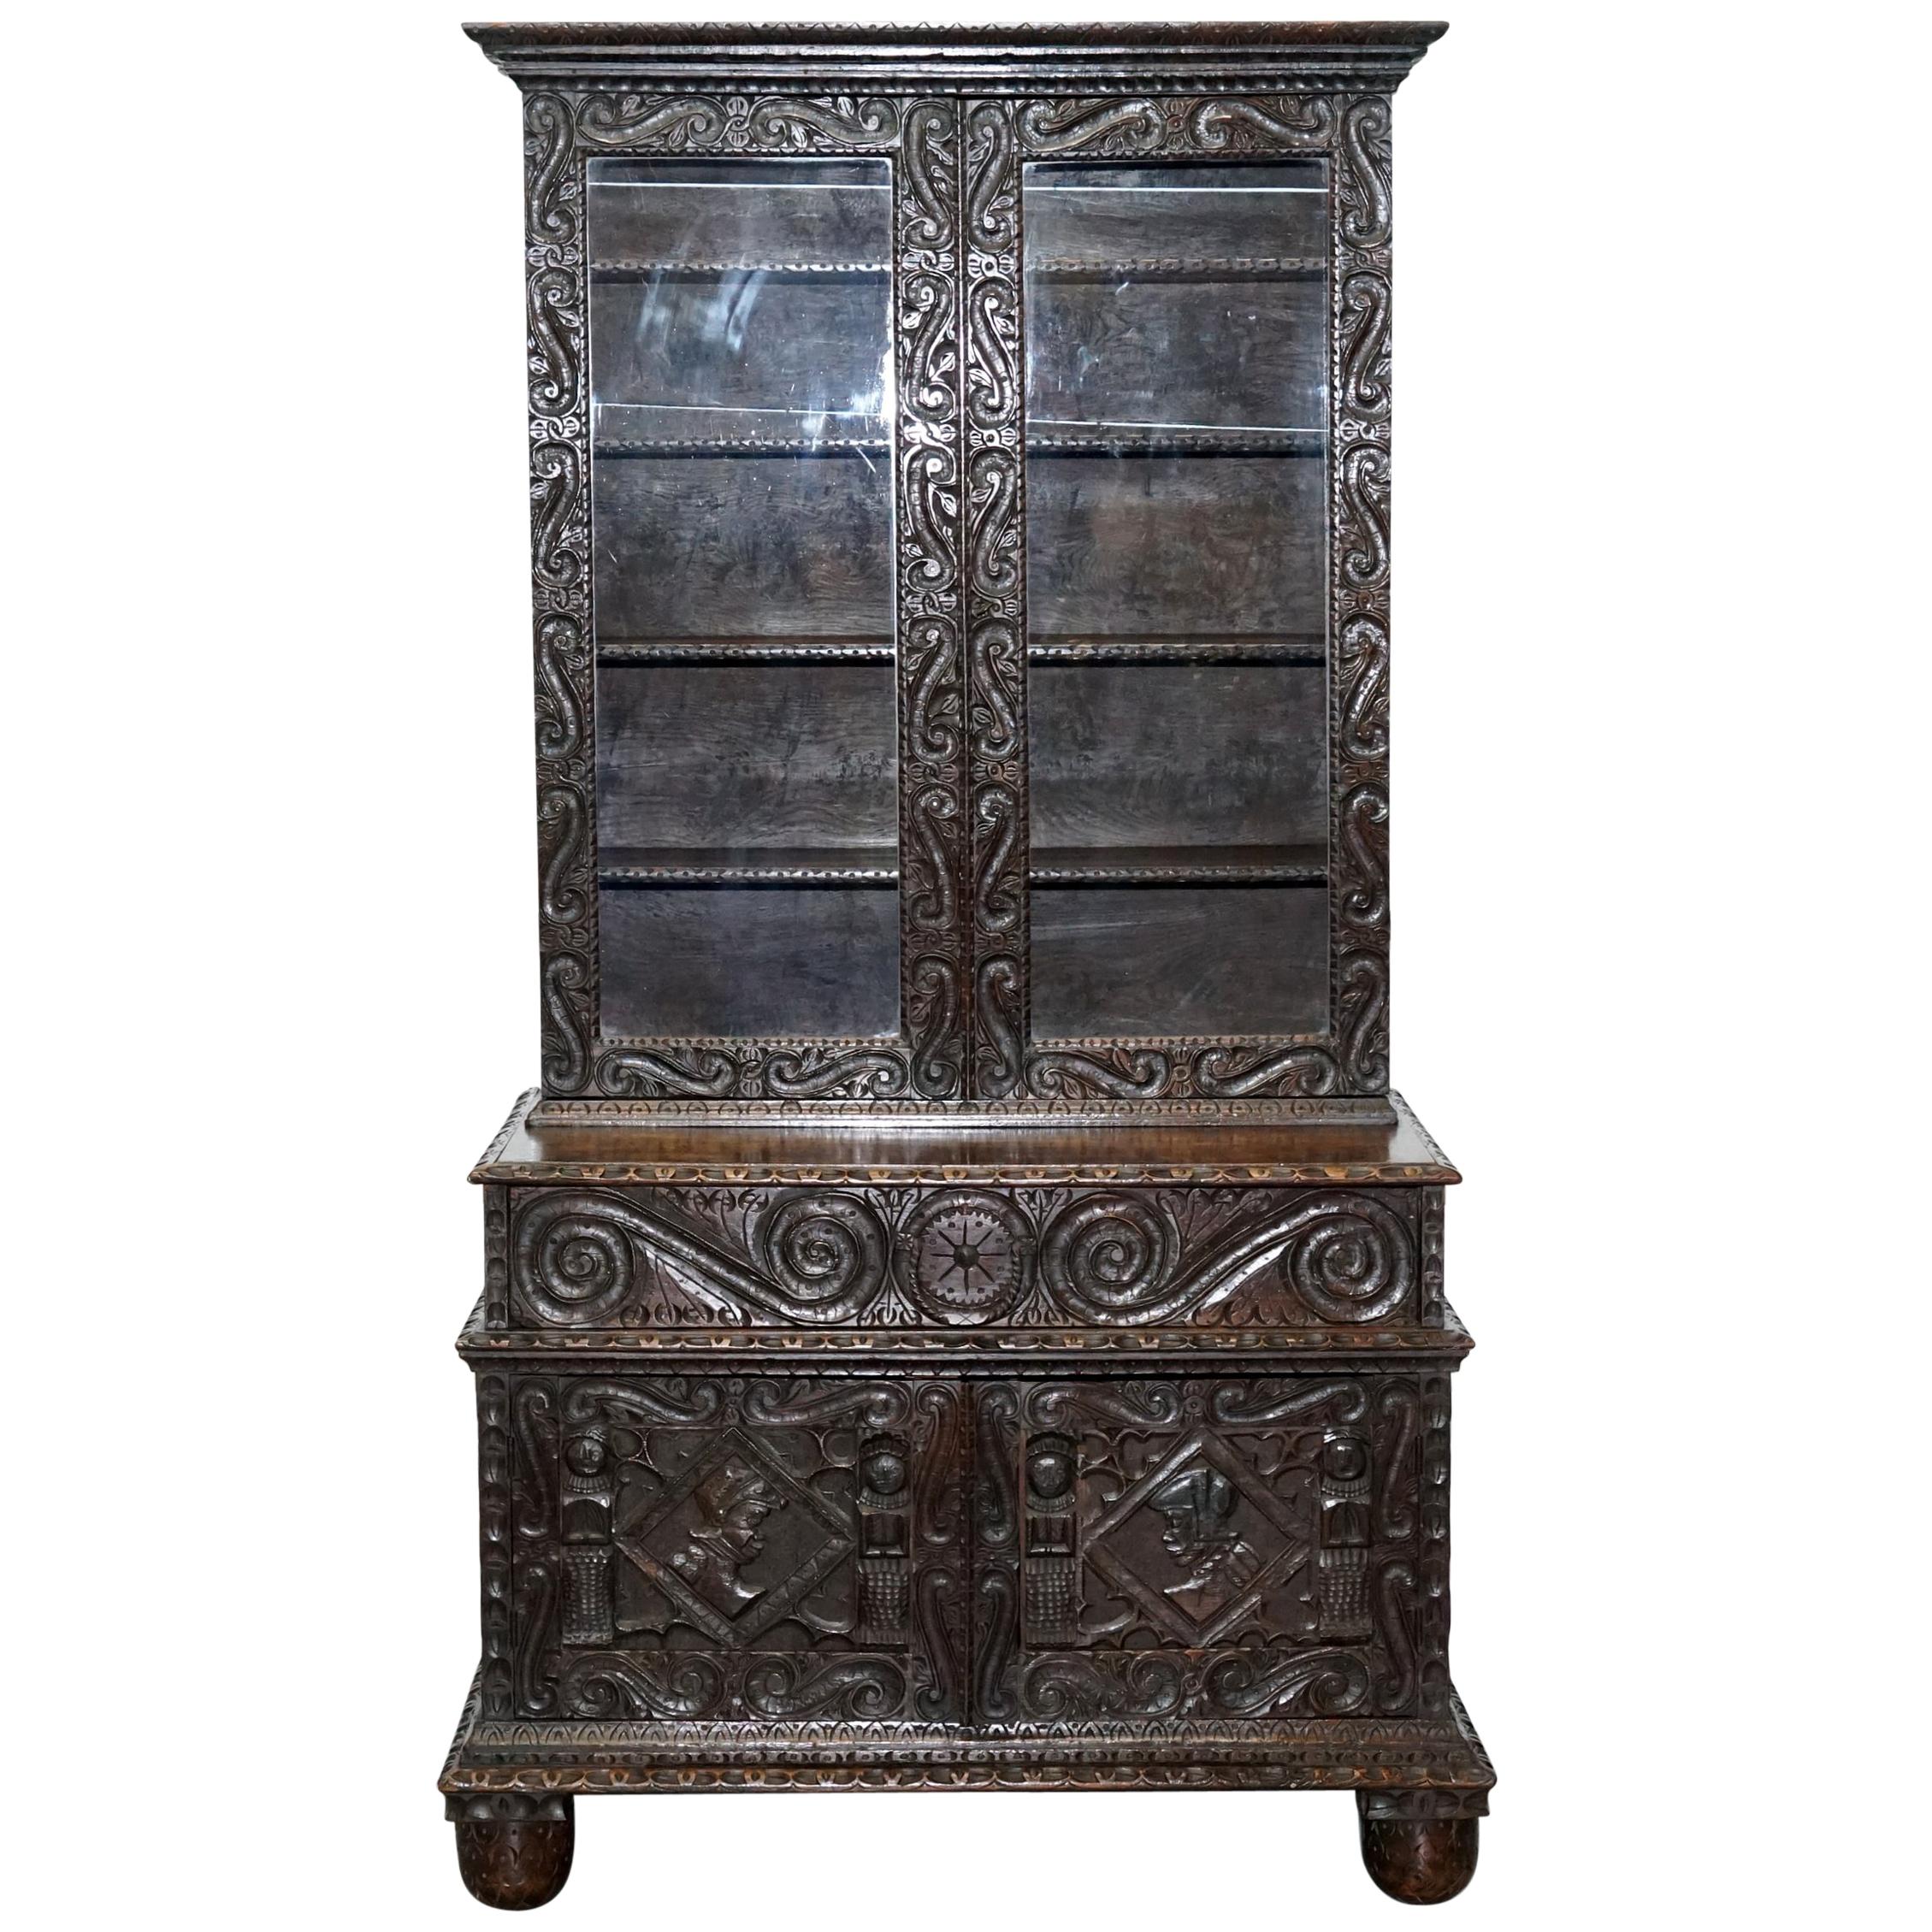 Original 18th Century Solid English Oak Hand-Carved Bookcase Cabinet, circa 1740